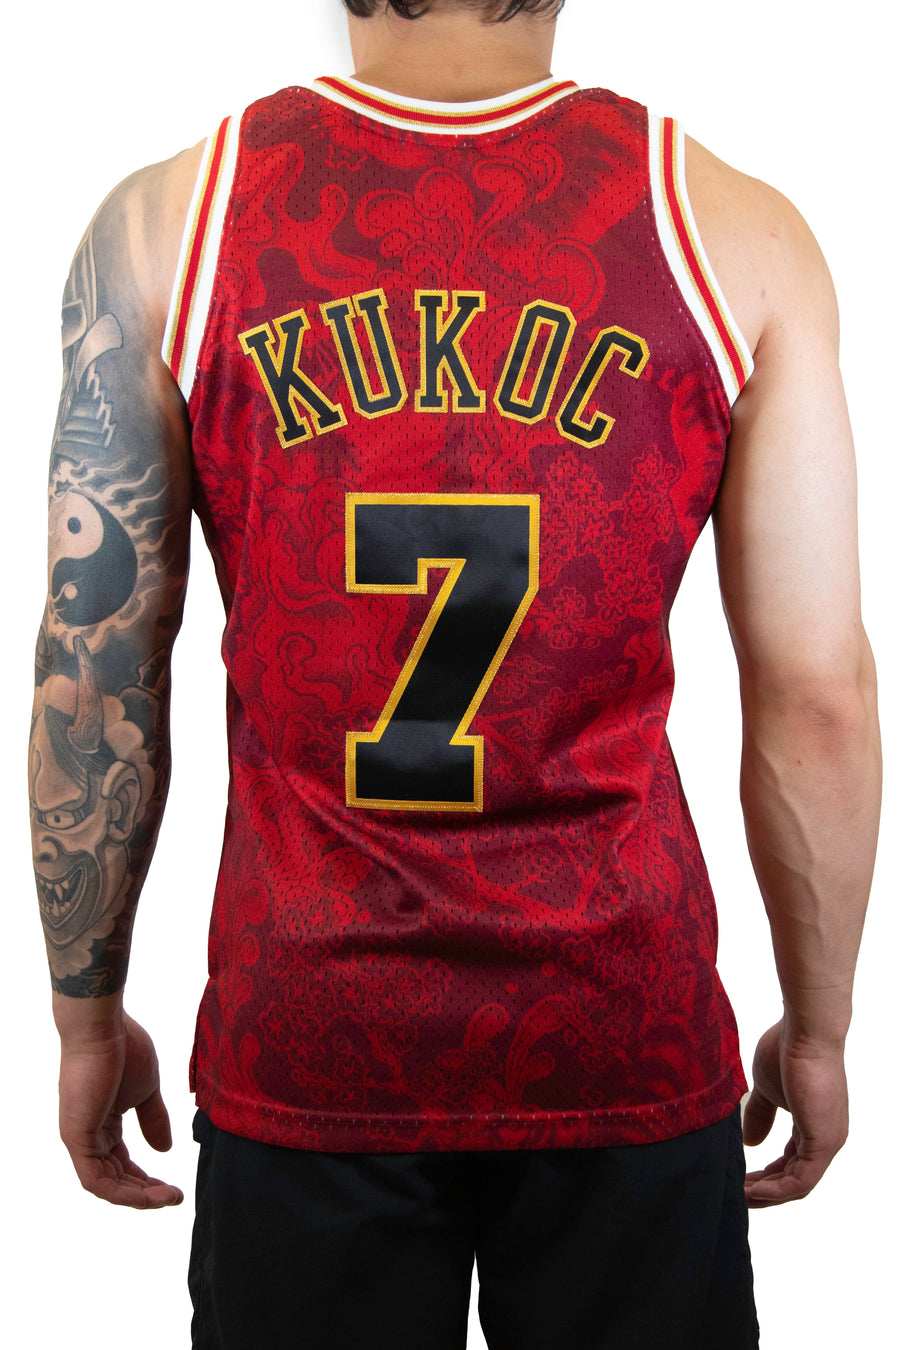 Mitchell & Ness: Hardwood Classic Chicago Bulls Jersey (Toni Kukoc)